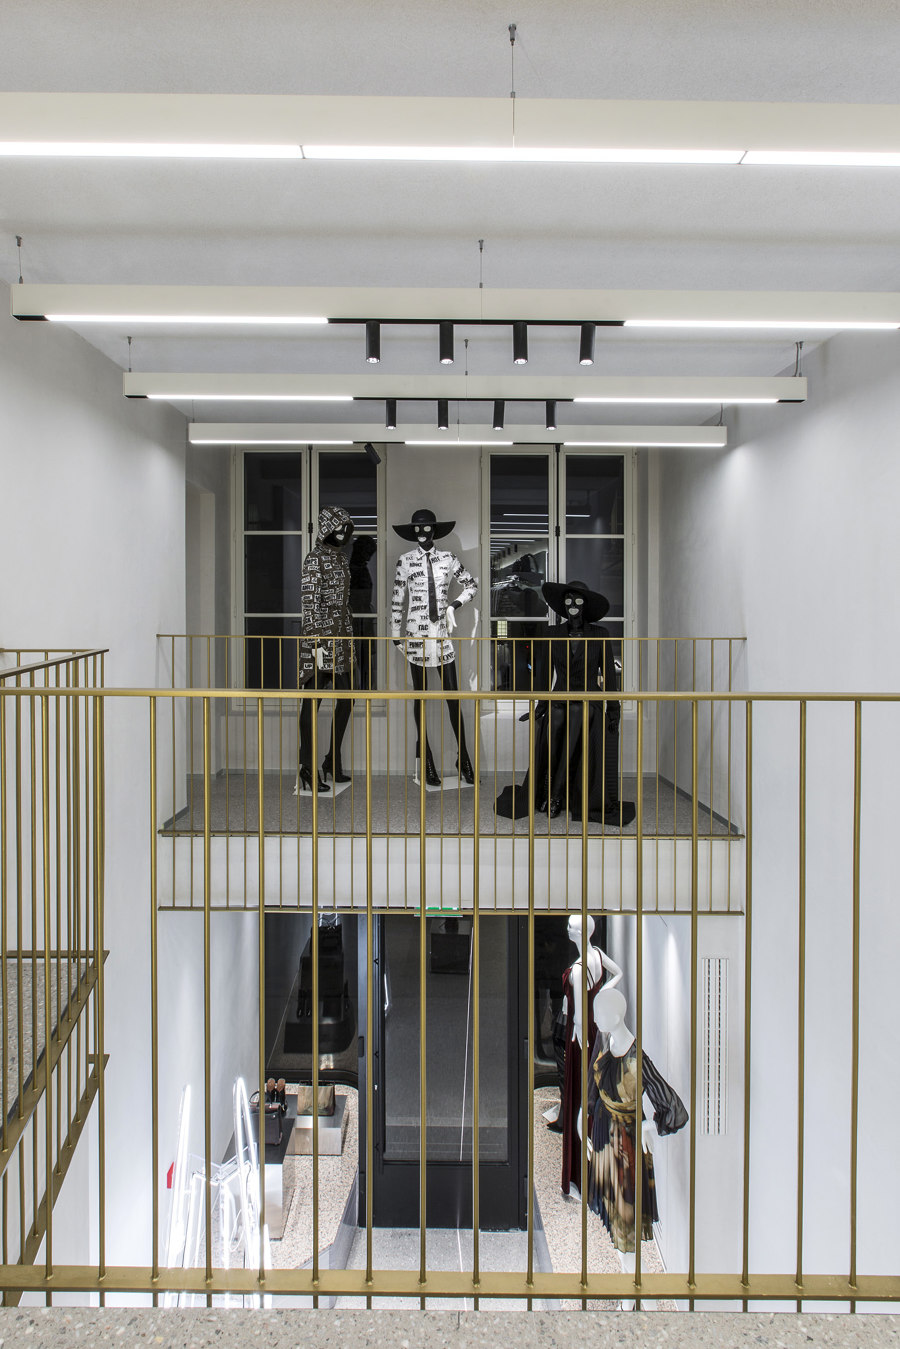 Moschino Showroom by Fabio Ferrillo | Shop interiors